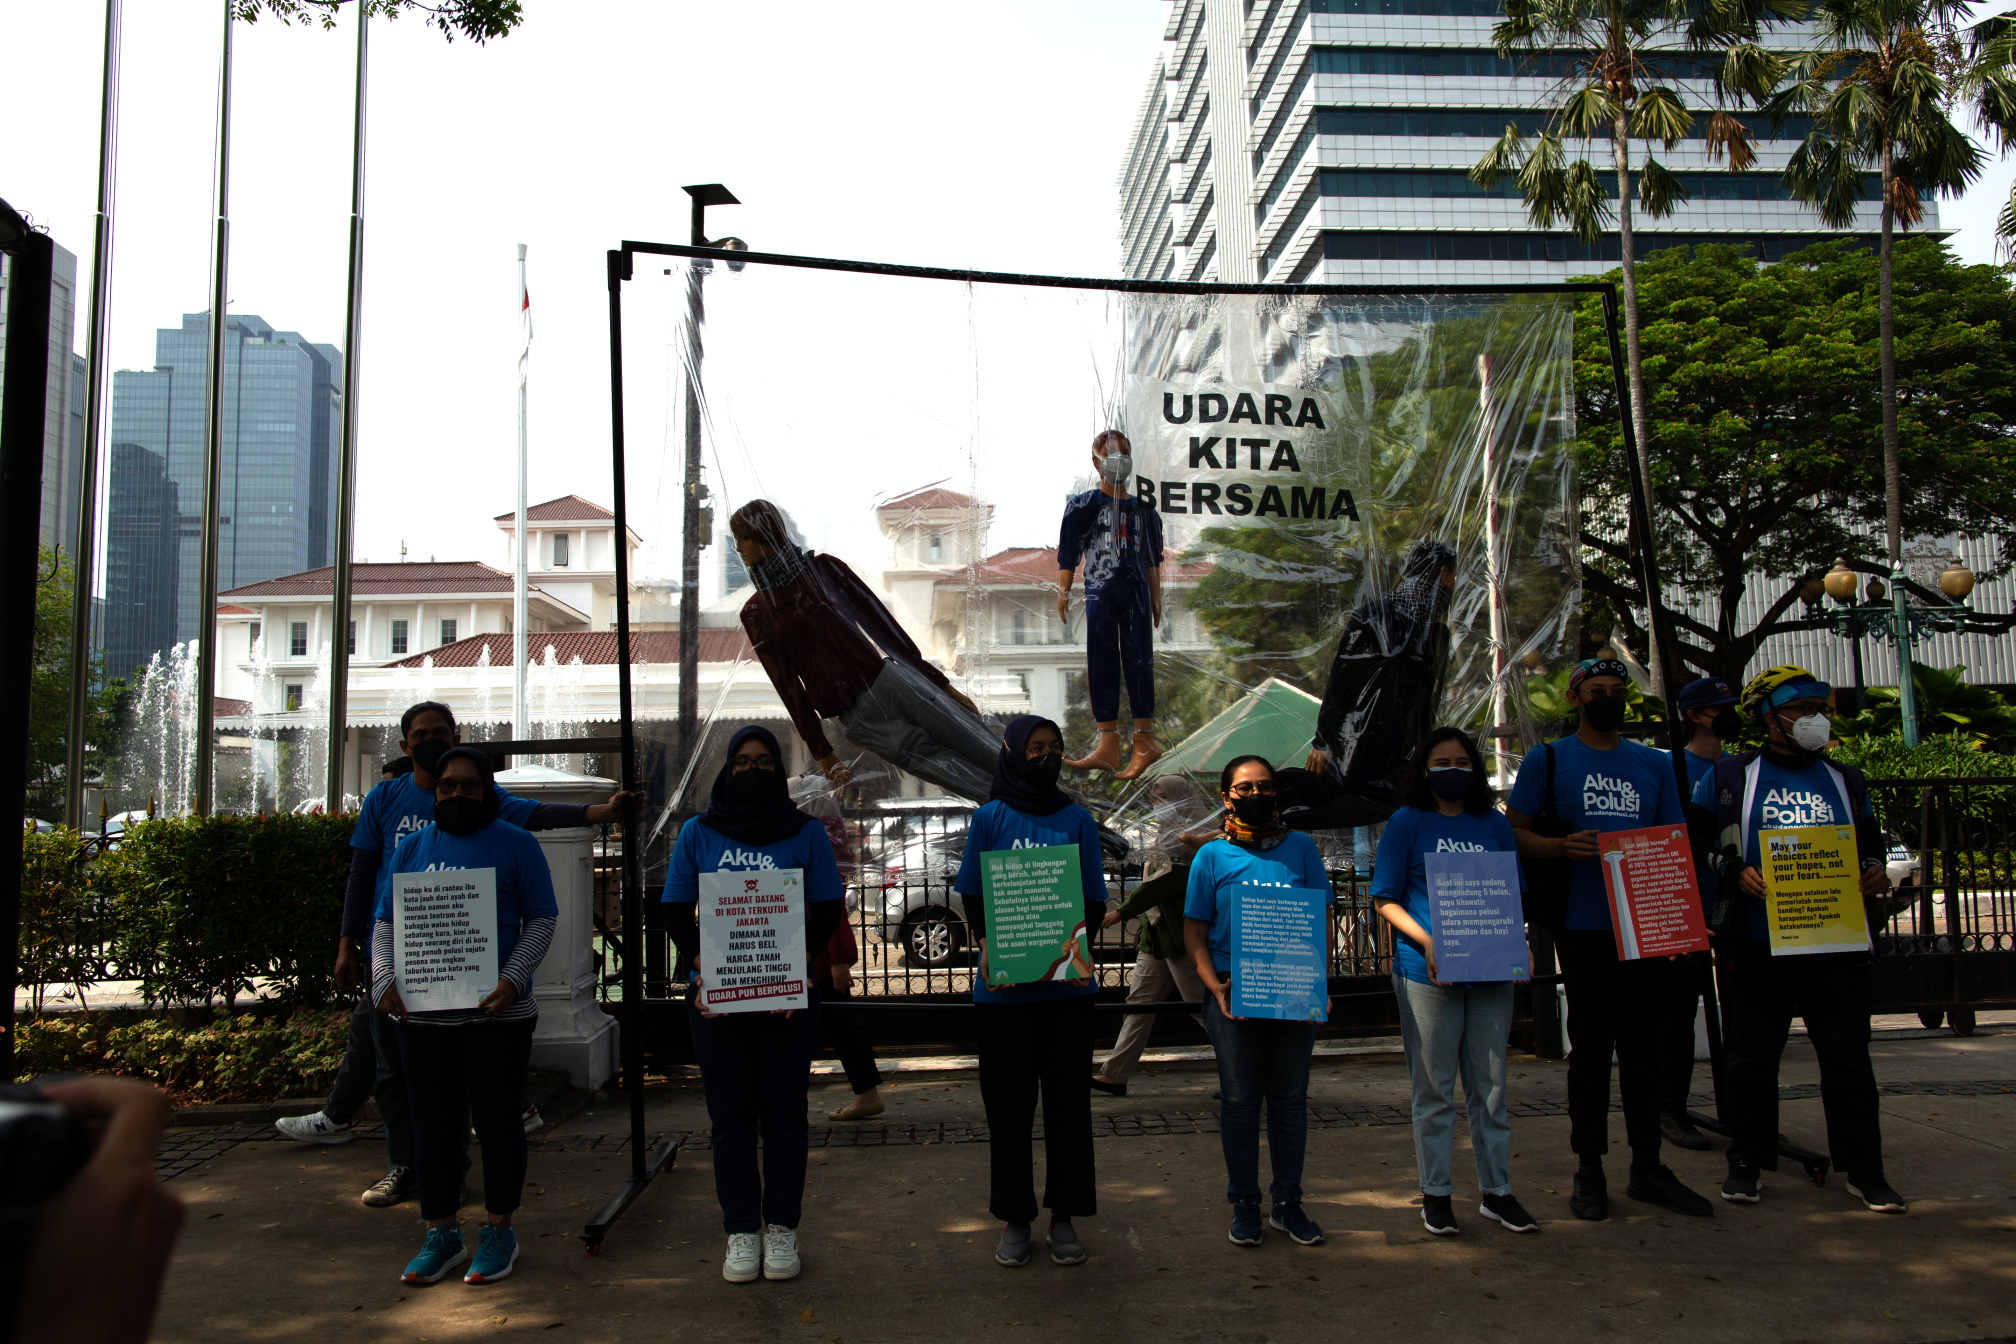 Aksi Koalisi IBUKOTA memperingati 1 tahun kemenangan warga negara untuk Udara Bersih (Ashar/SinPo.id)